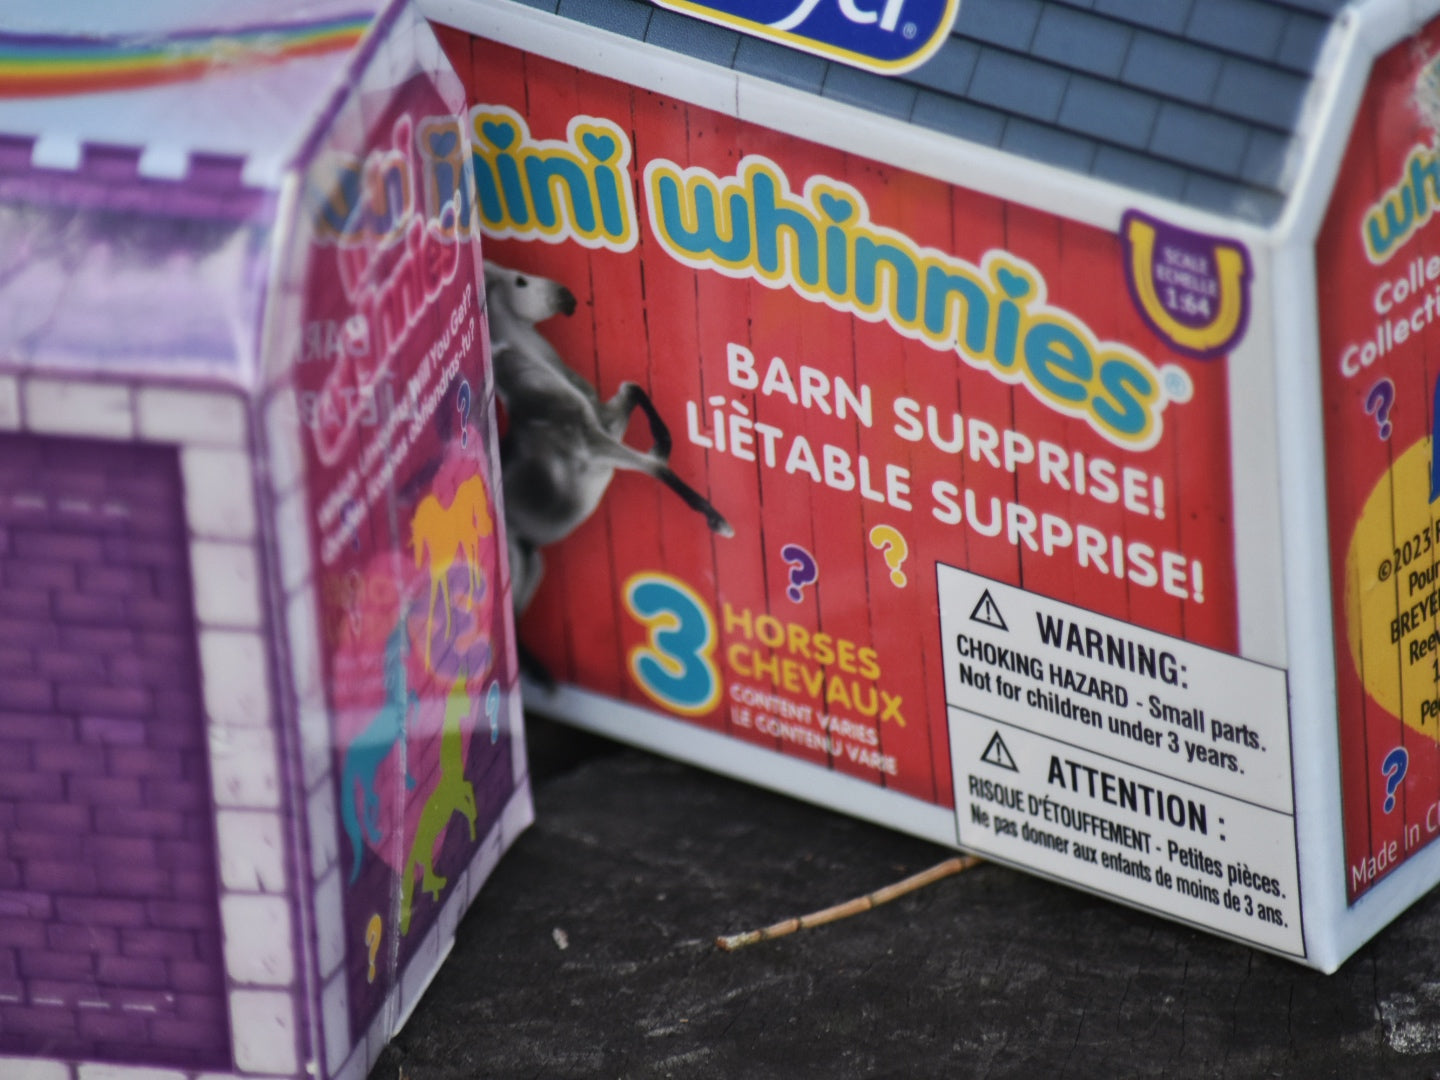 Breyer Mini Whinnies Barn Surprise!